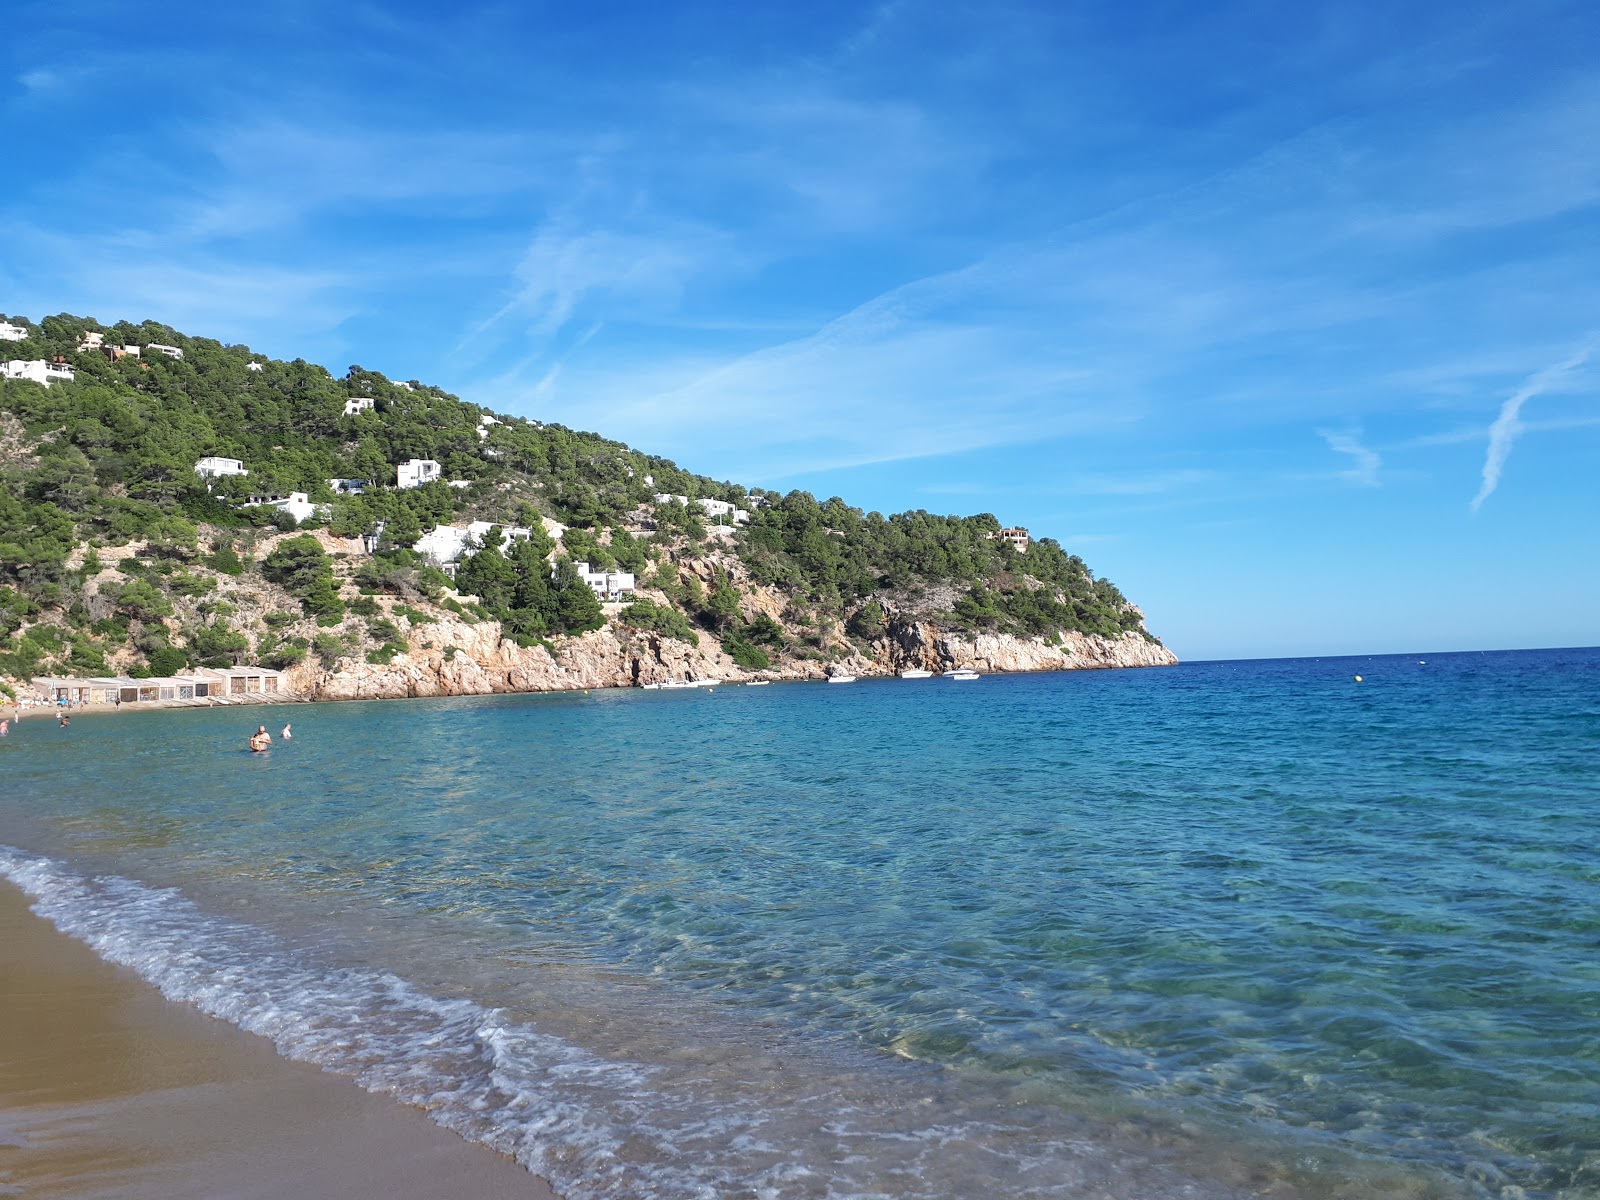 Fotografija Plaža Cala de Sant Vicent nahaja se v naravnem okolju